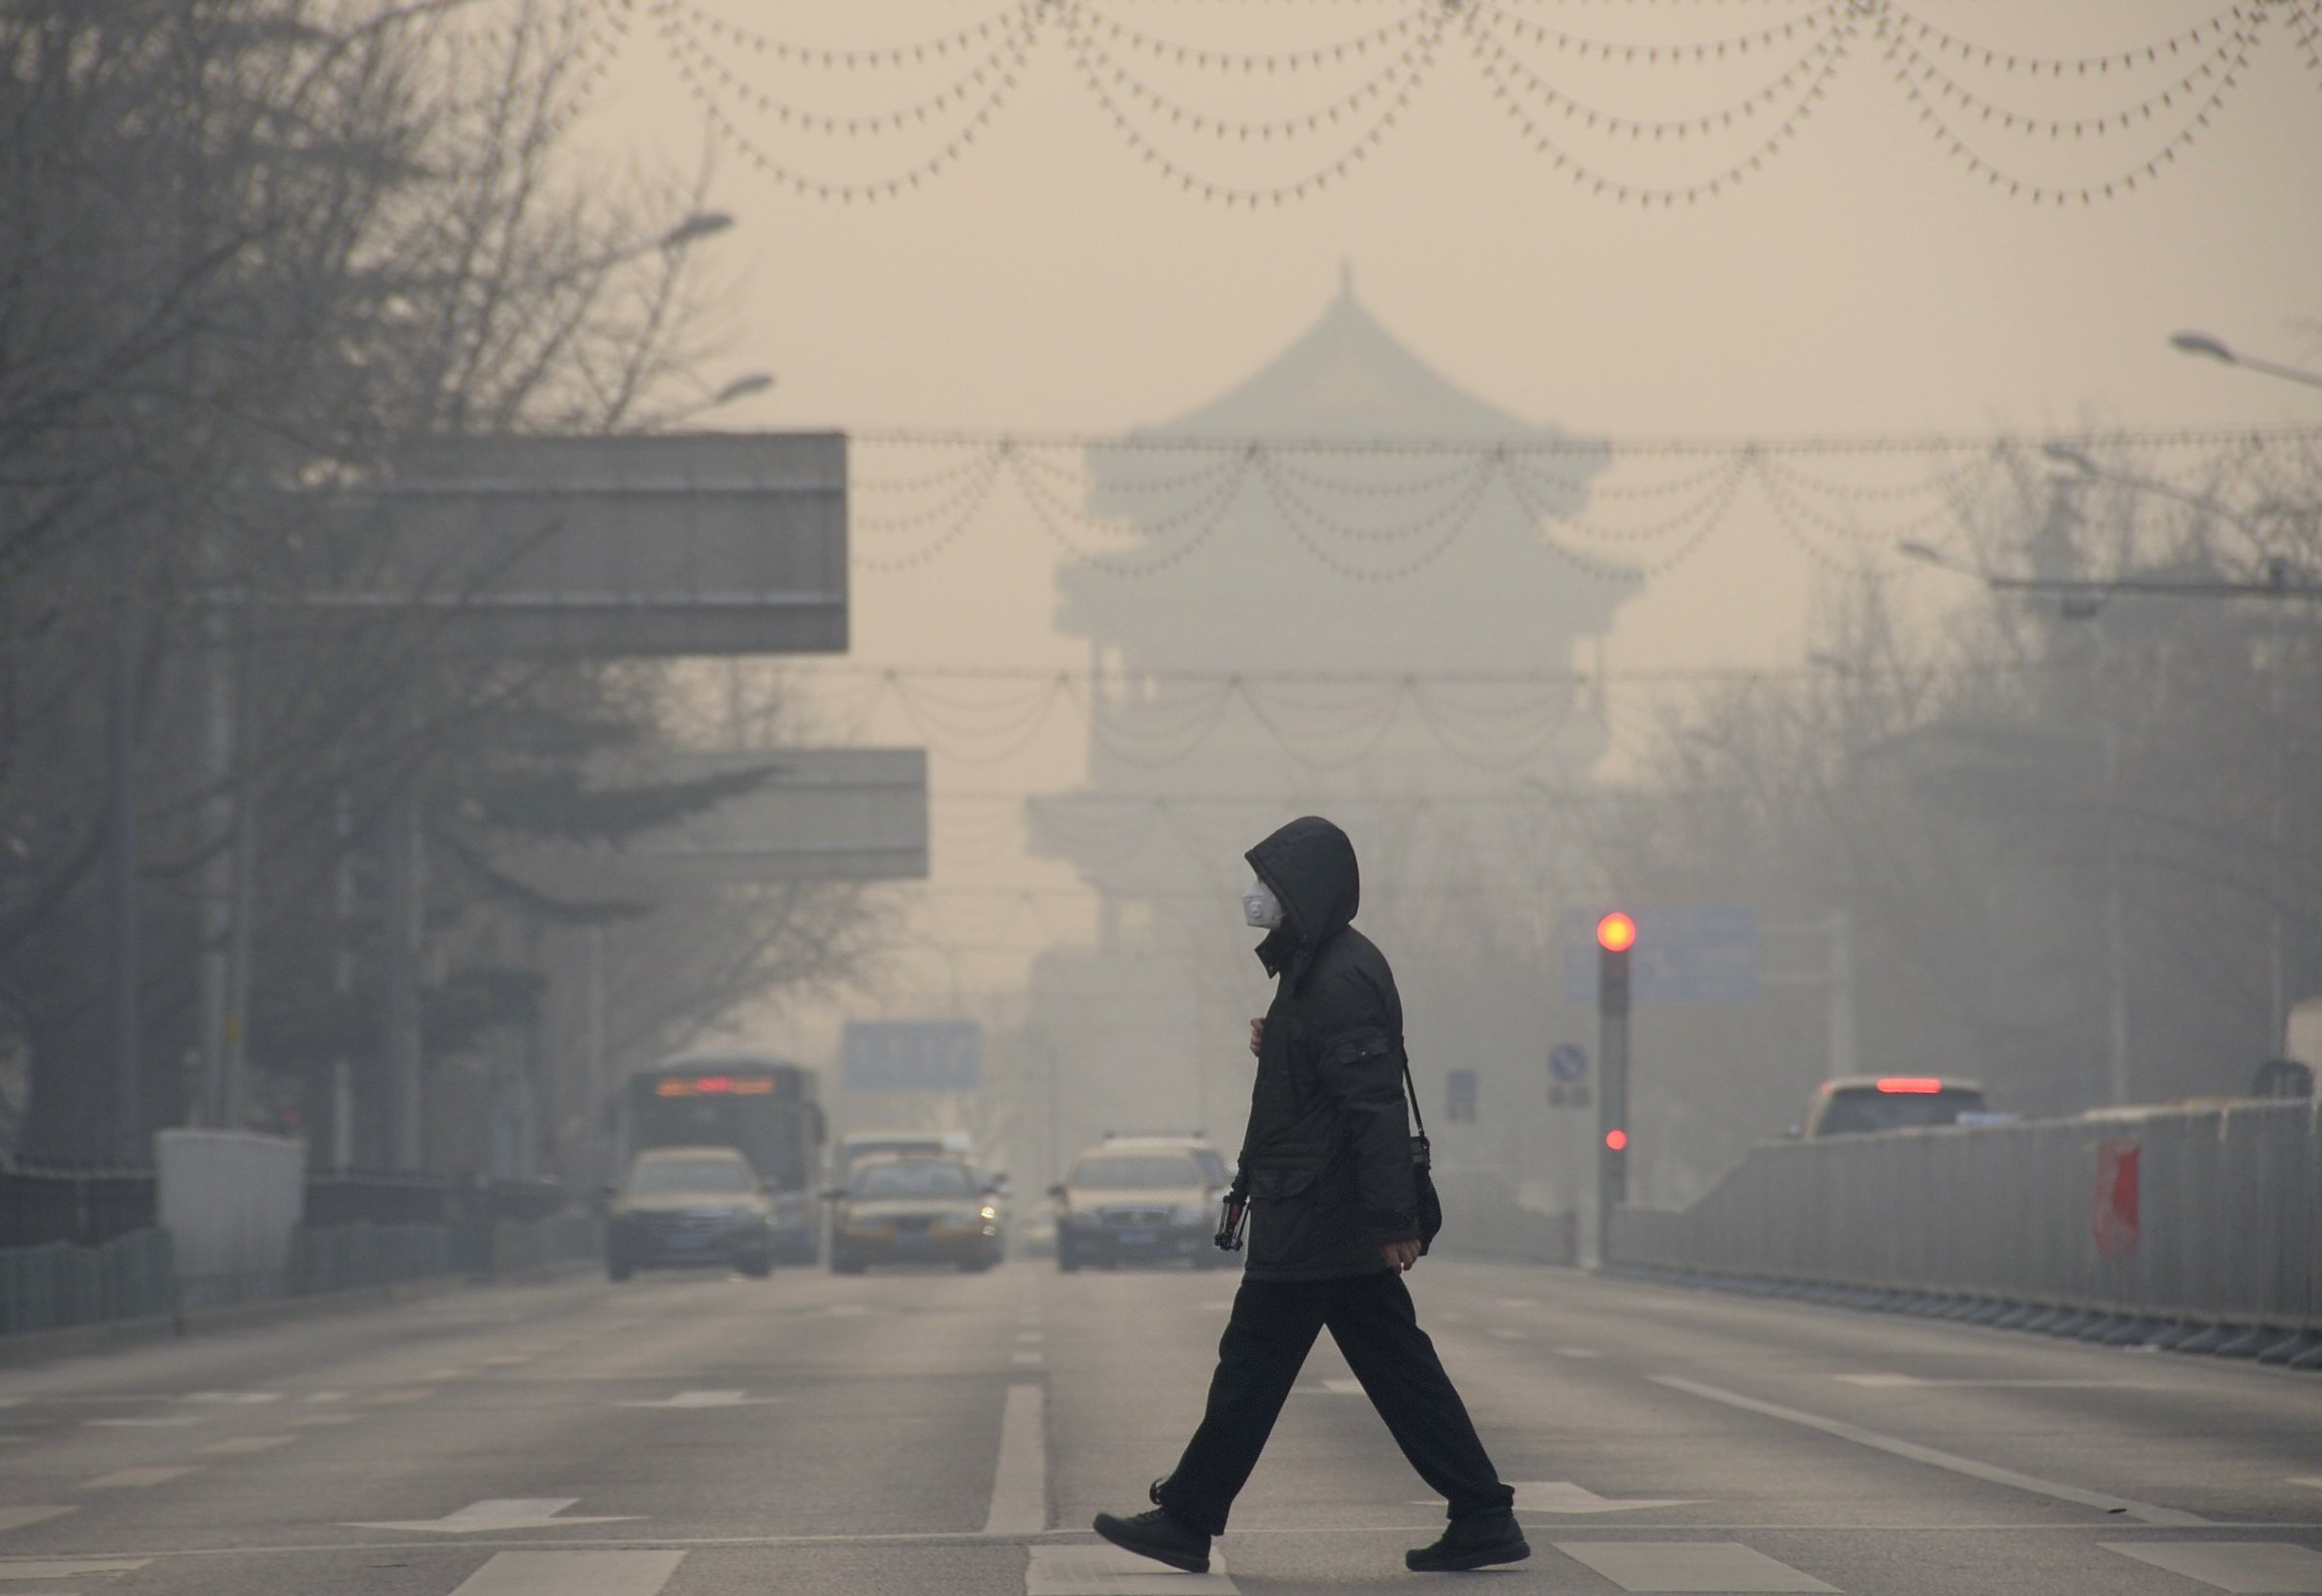 beijing air pollution